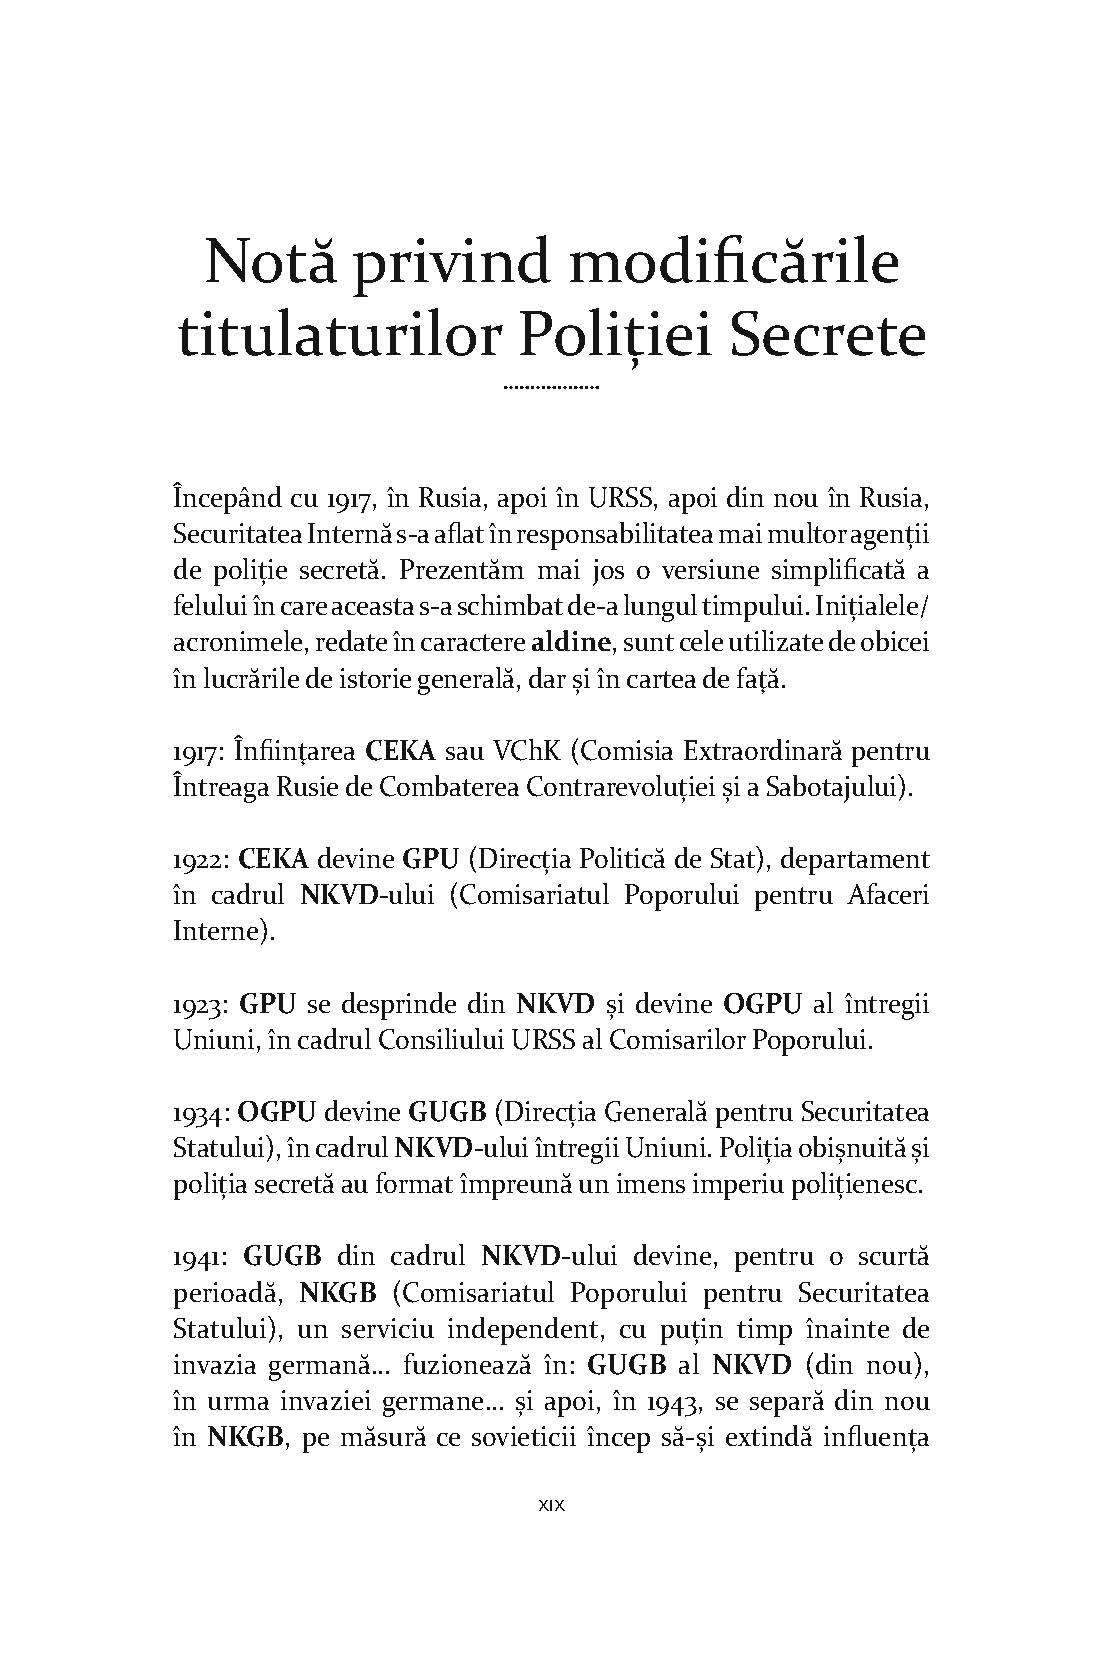 O Istorie Secreta: Statul Politienesc al Rusiei Sovietice - Publisol.ro